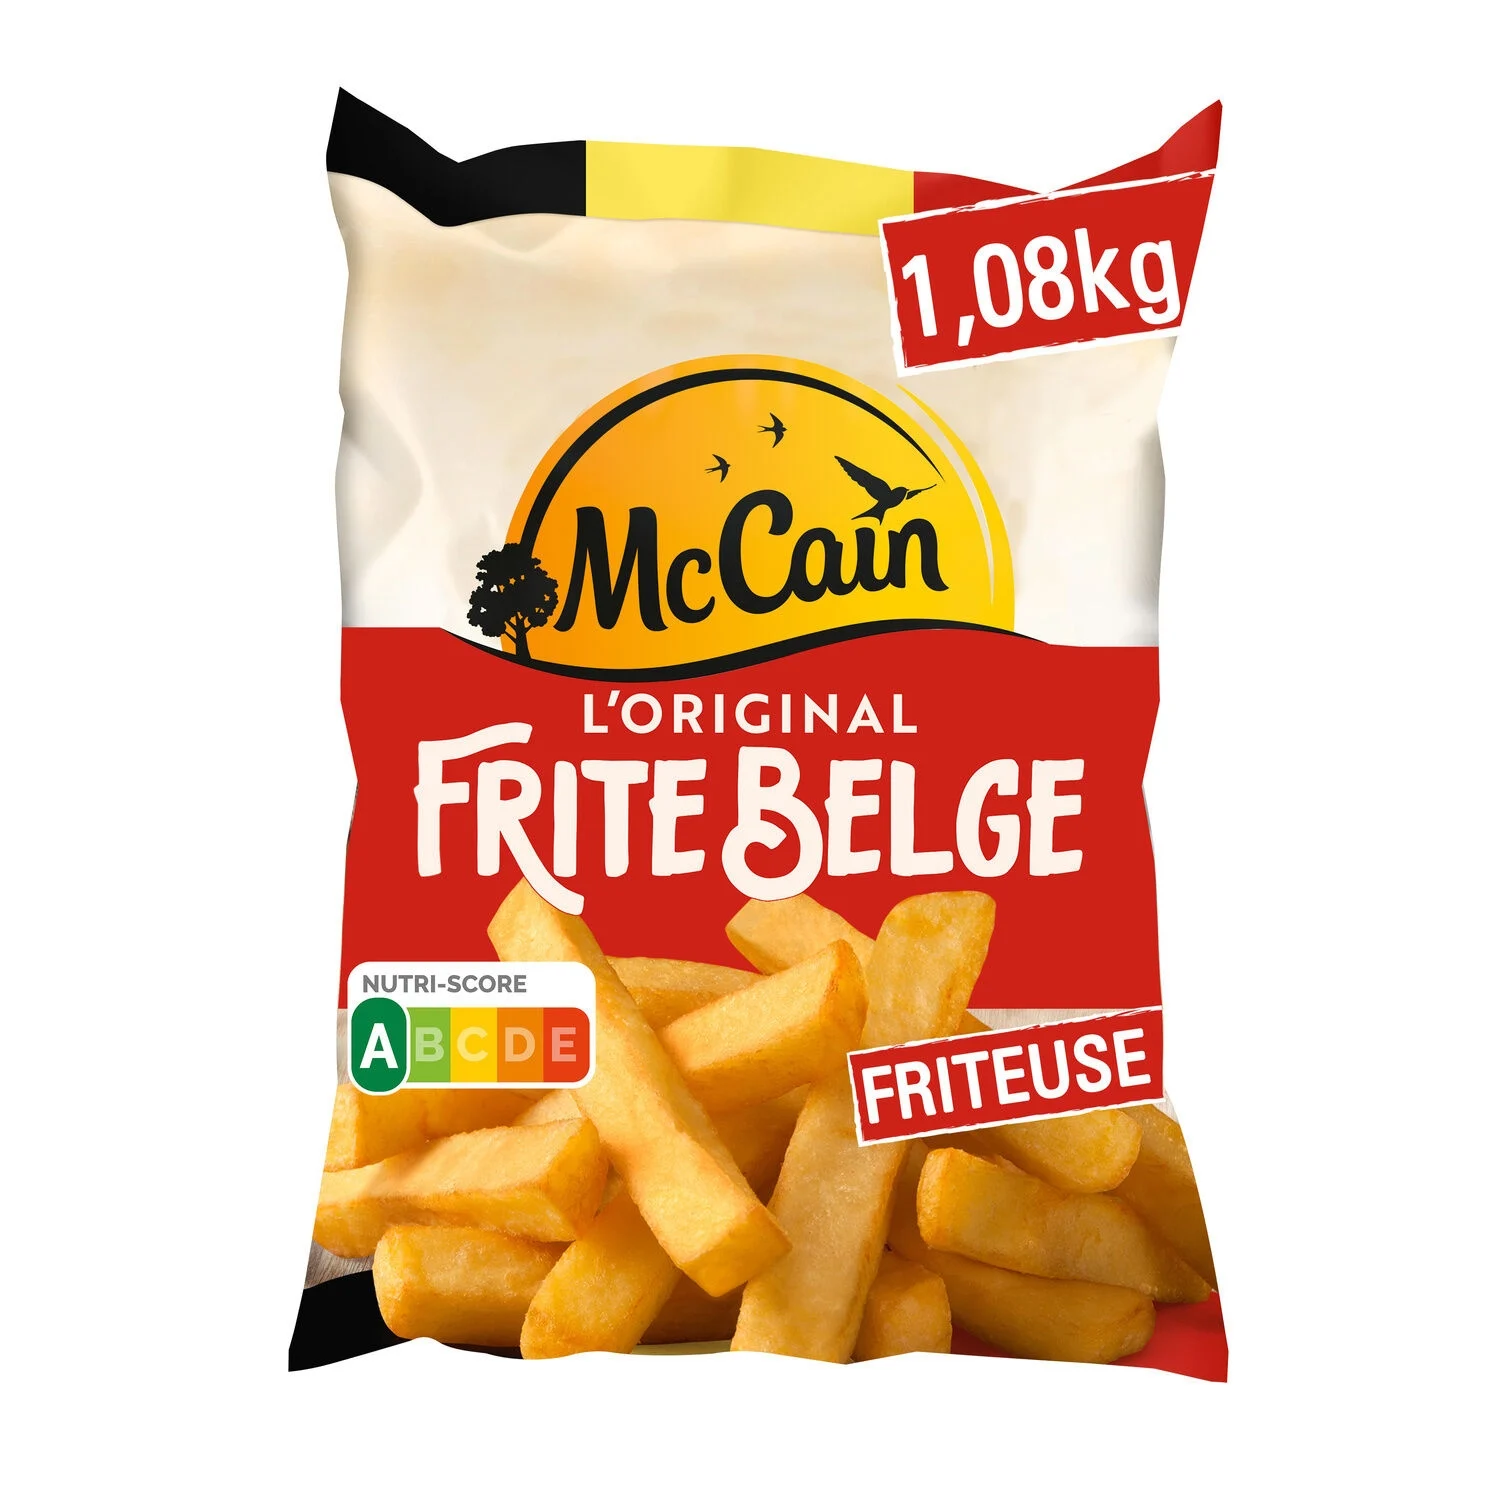 Frit Belge Mc Cain 1 080kg